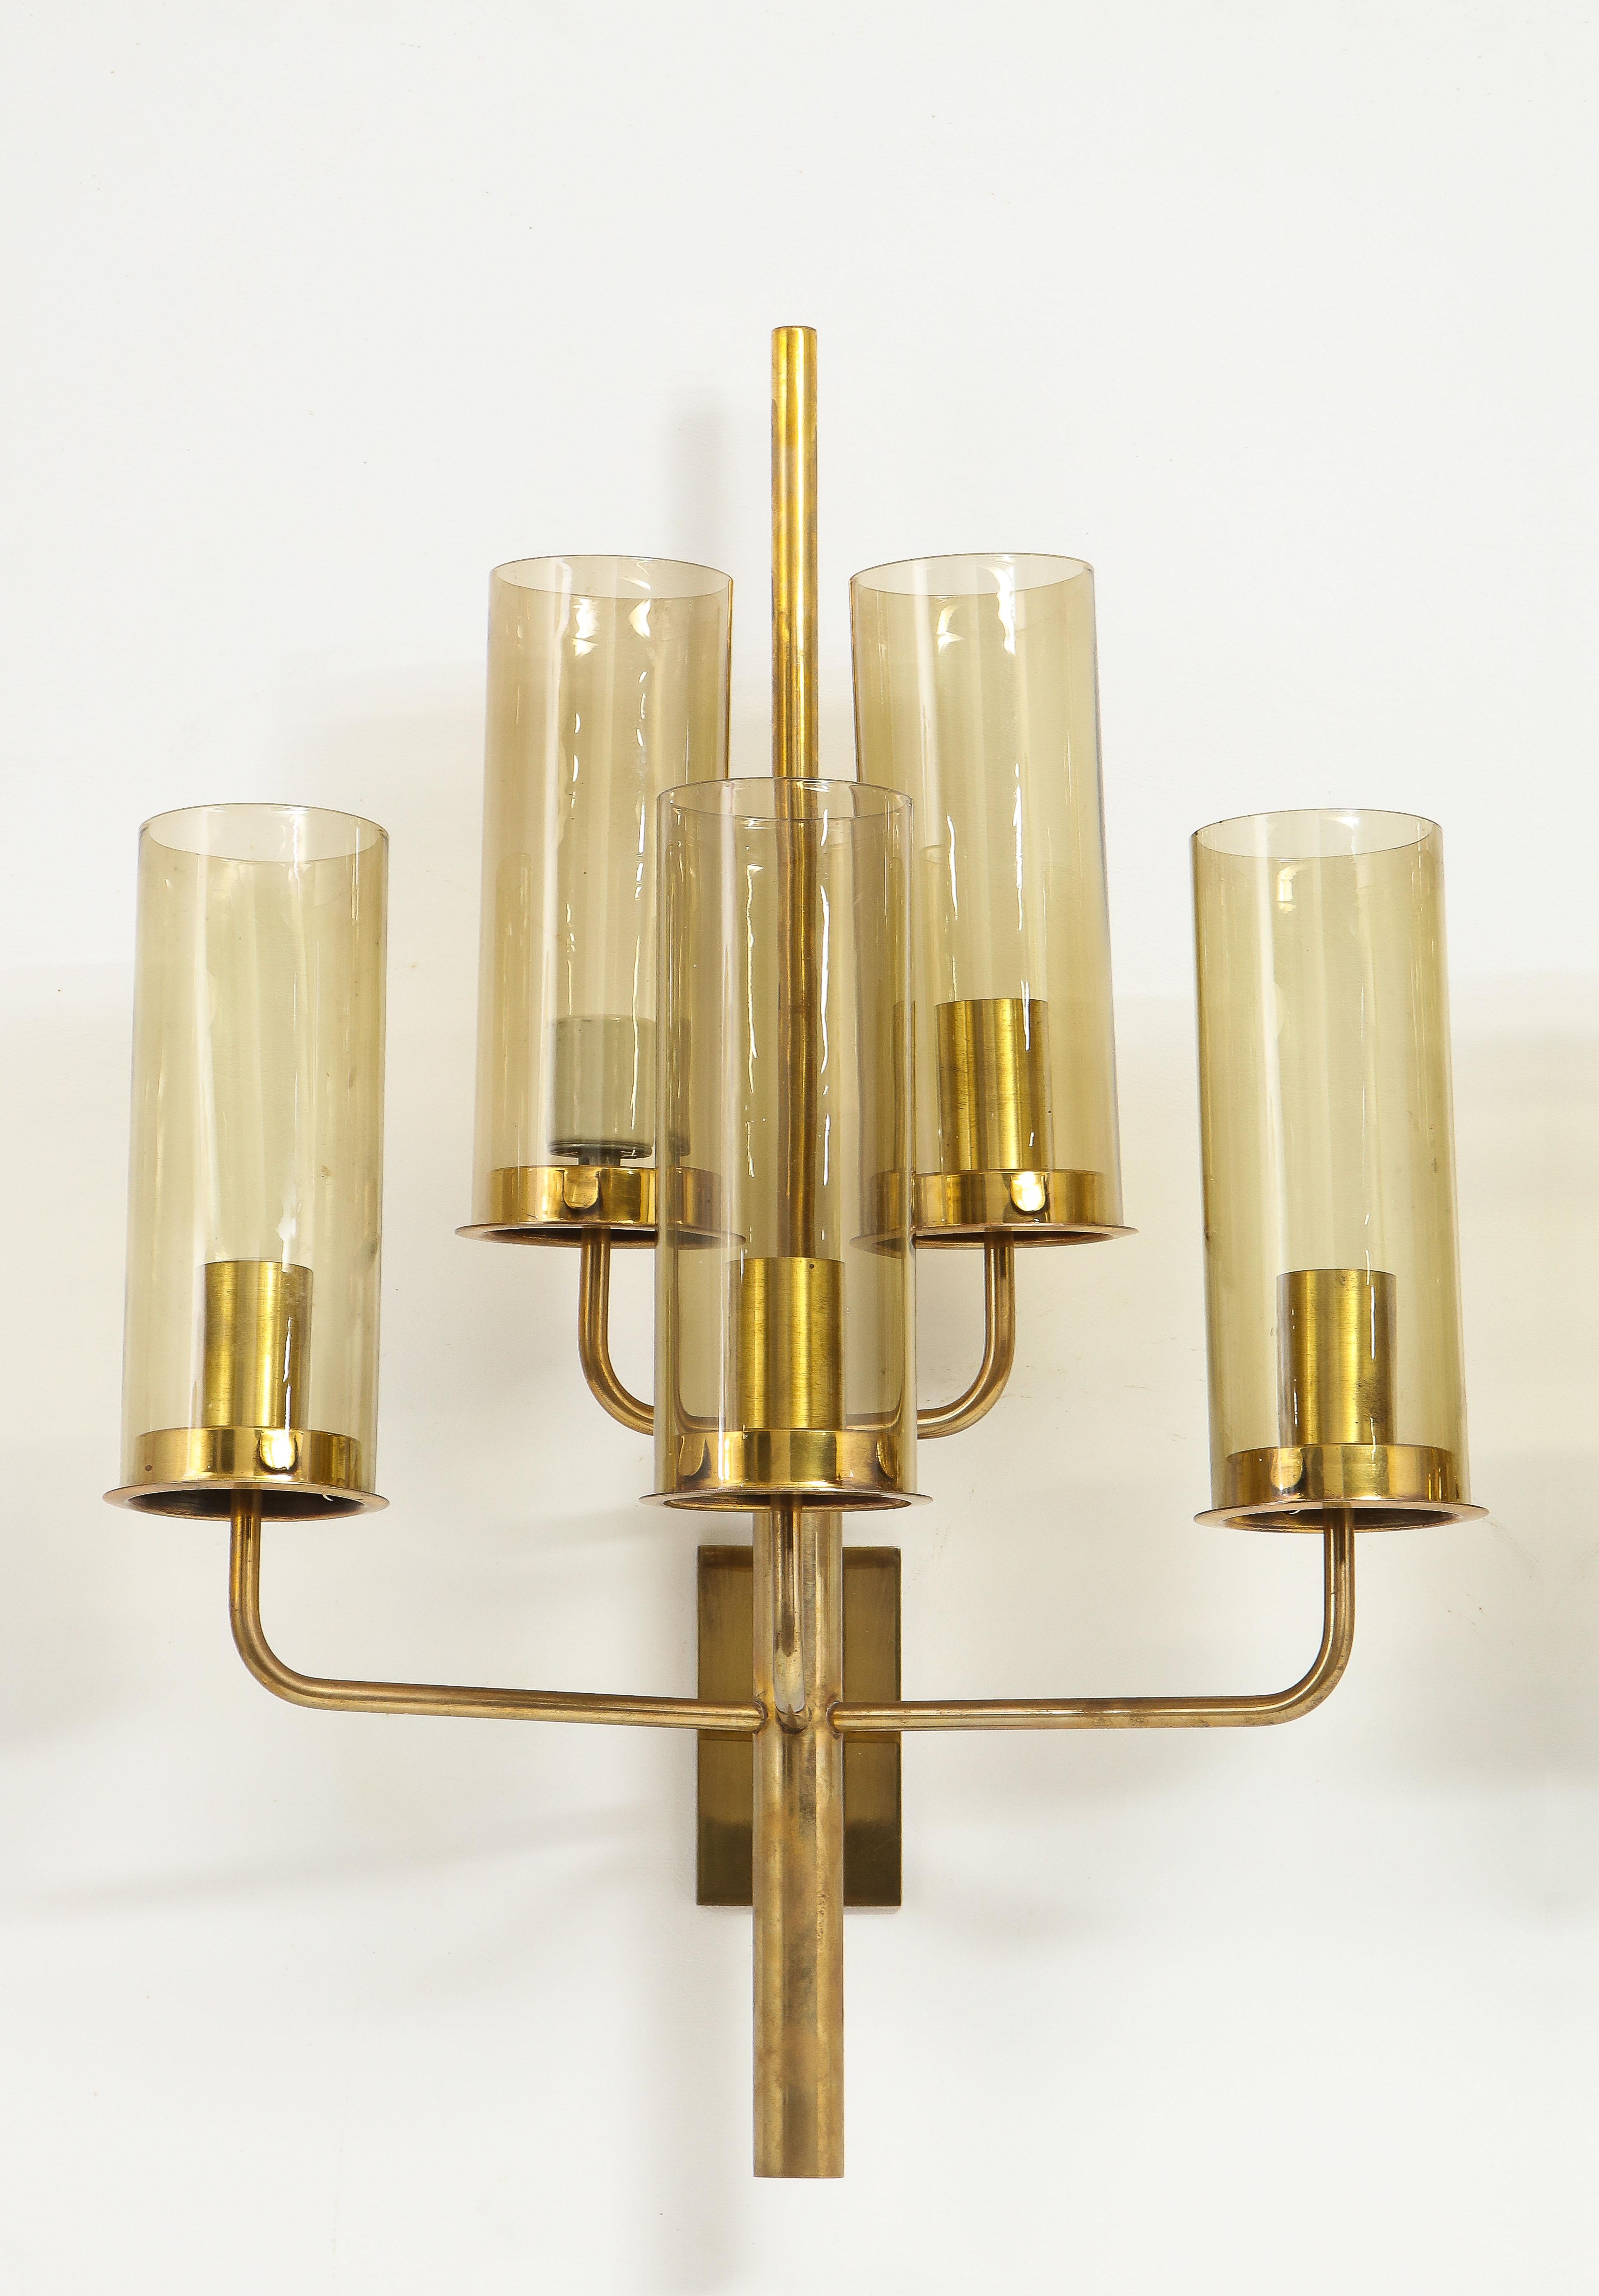 Hans-Agne Jakobsson Brass & Glass Sconces, Sweden 1950's For Sale 6